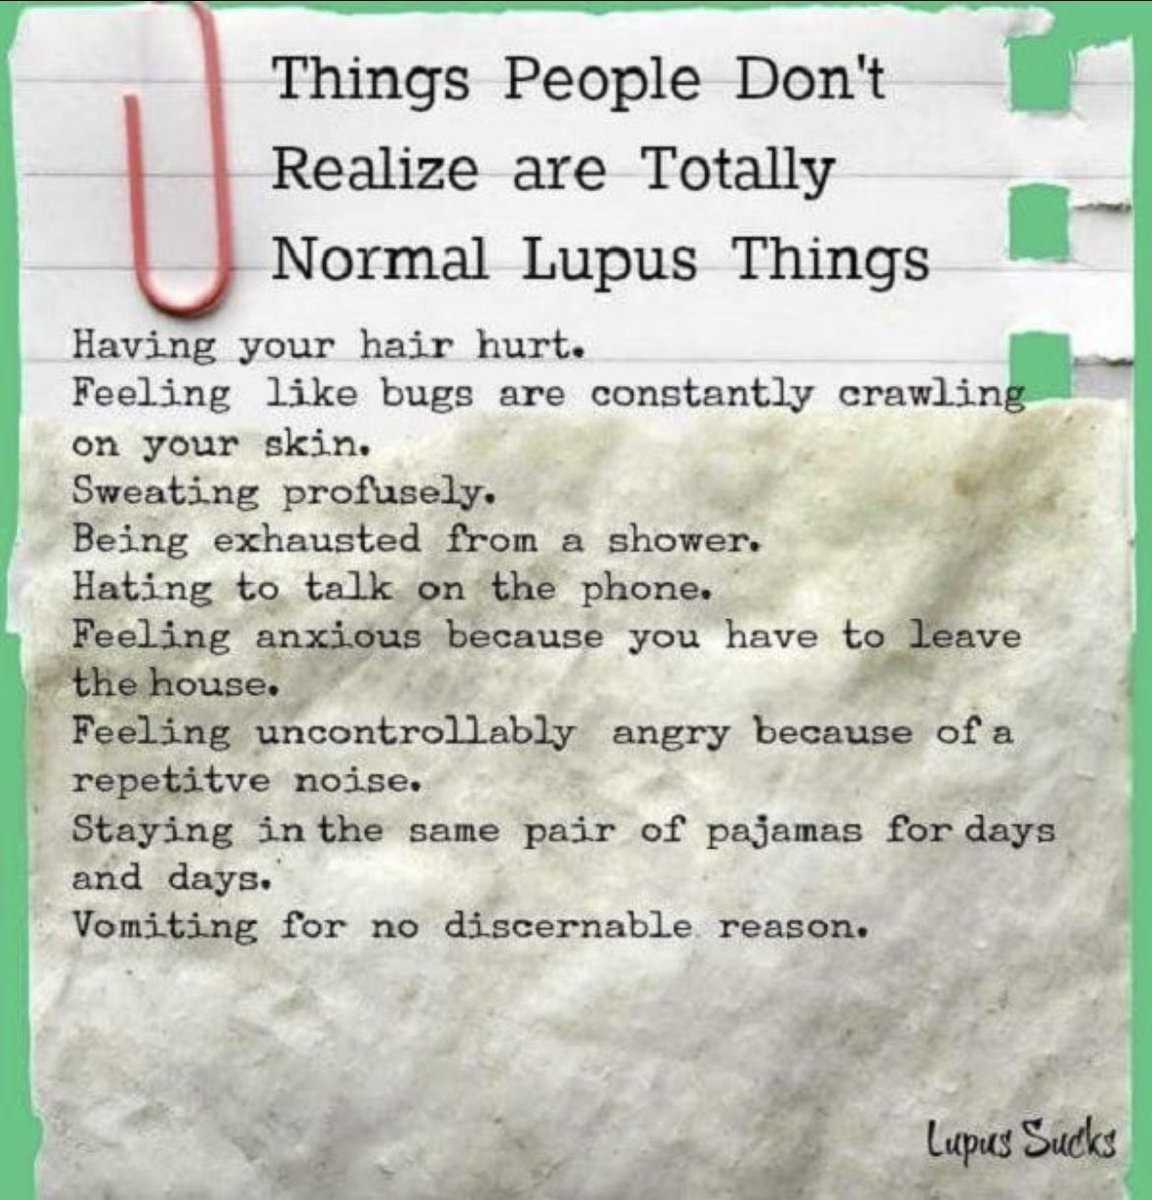 Life with lupus. 
#LupusWarrior 🦋👊🏻💪🏻
#LupusAwarenessMonth